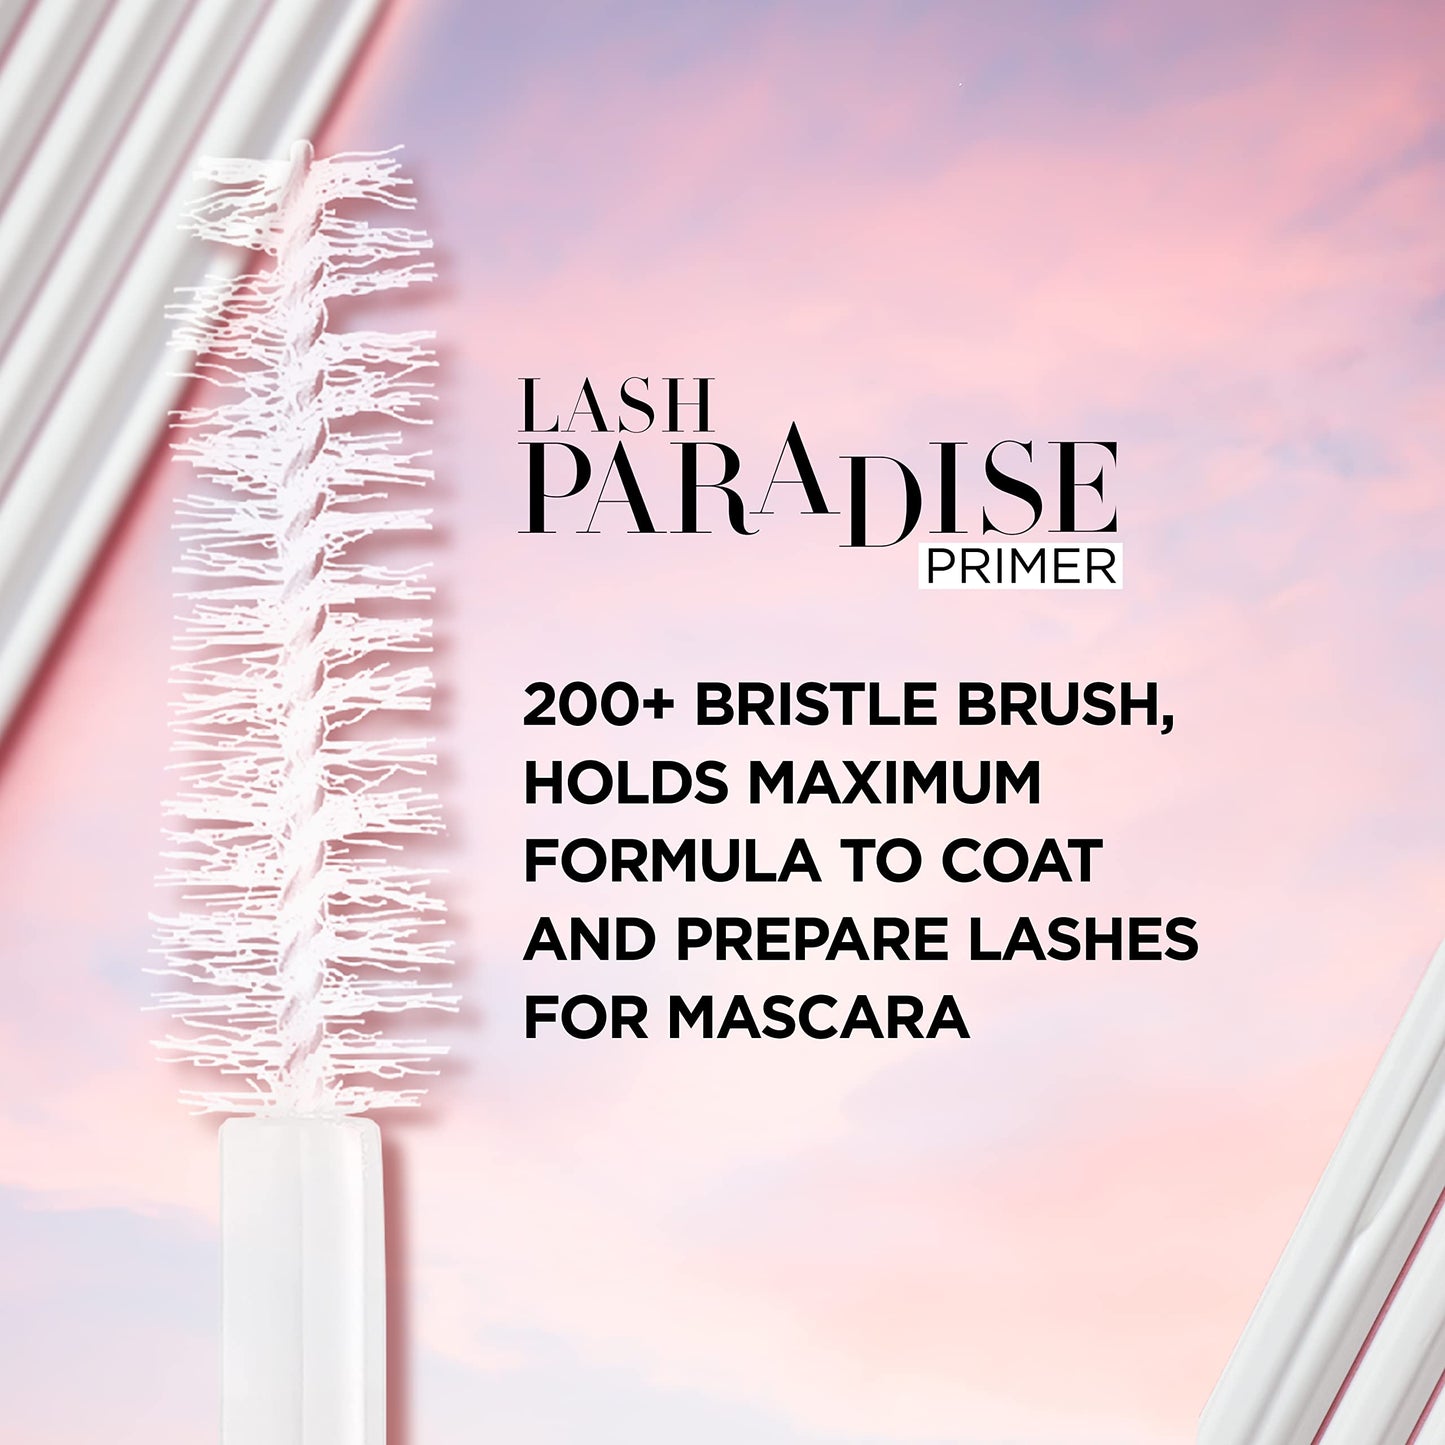 L'Oreal Paris Cosmetics Voluminous Lash Paradise Mascara Primer Base, Millennial Pink, 0.27 Fluid Ounce, Packaging May Vary